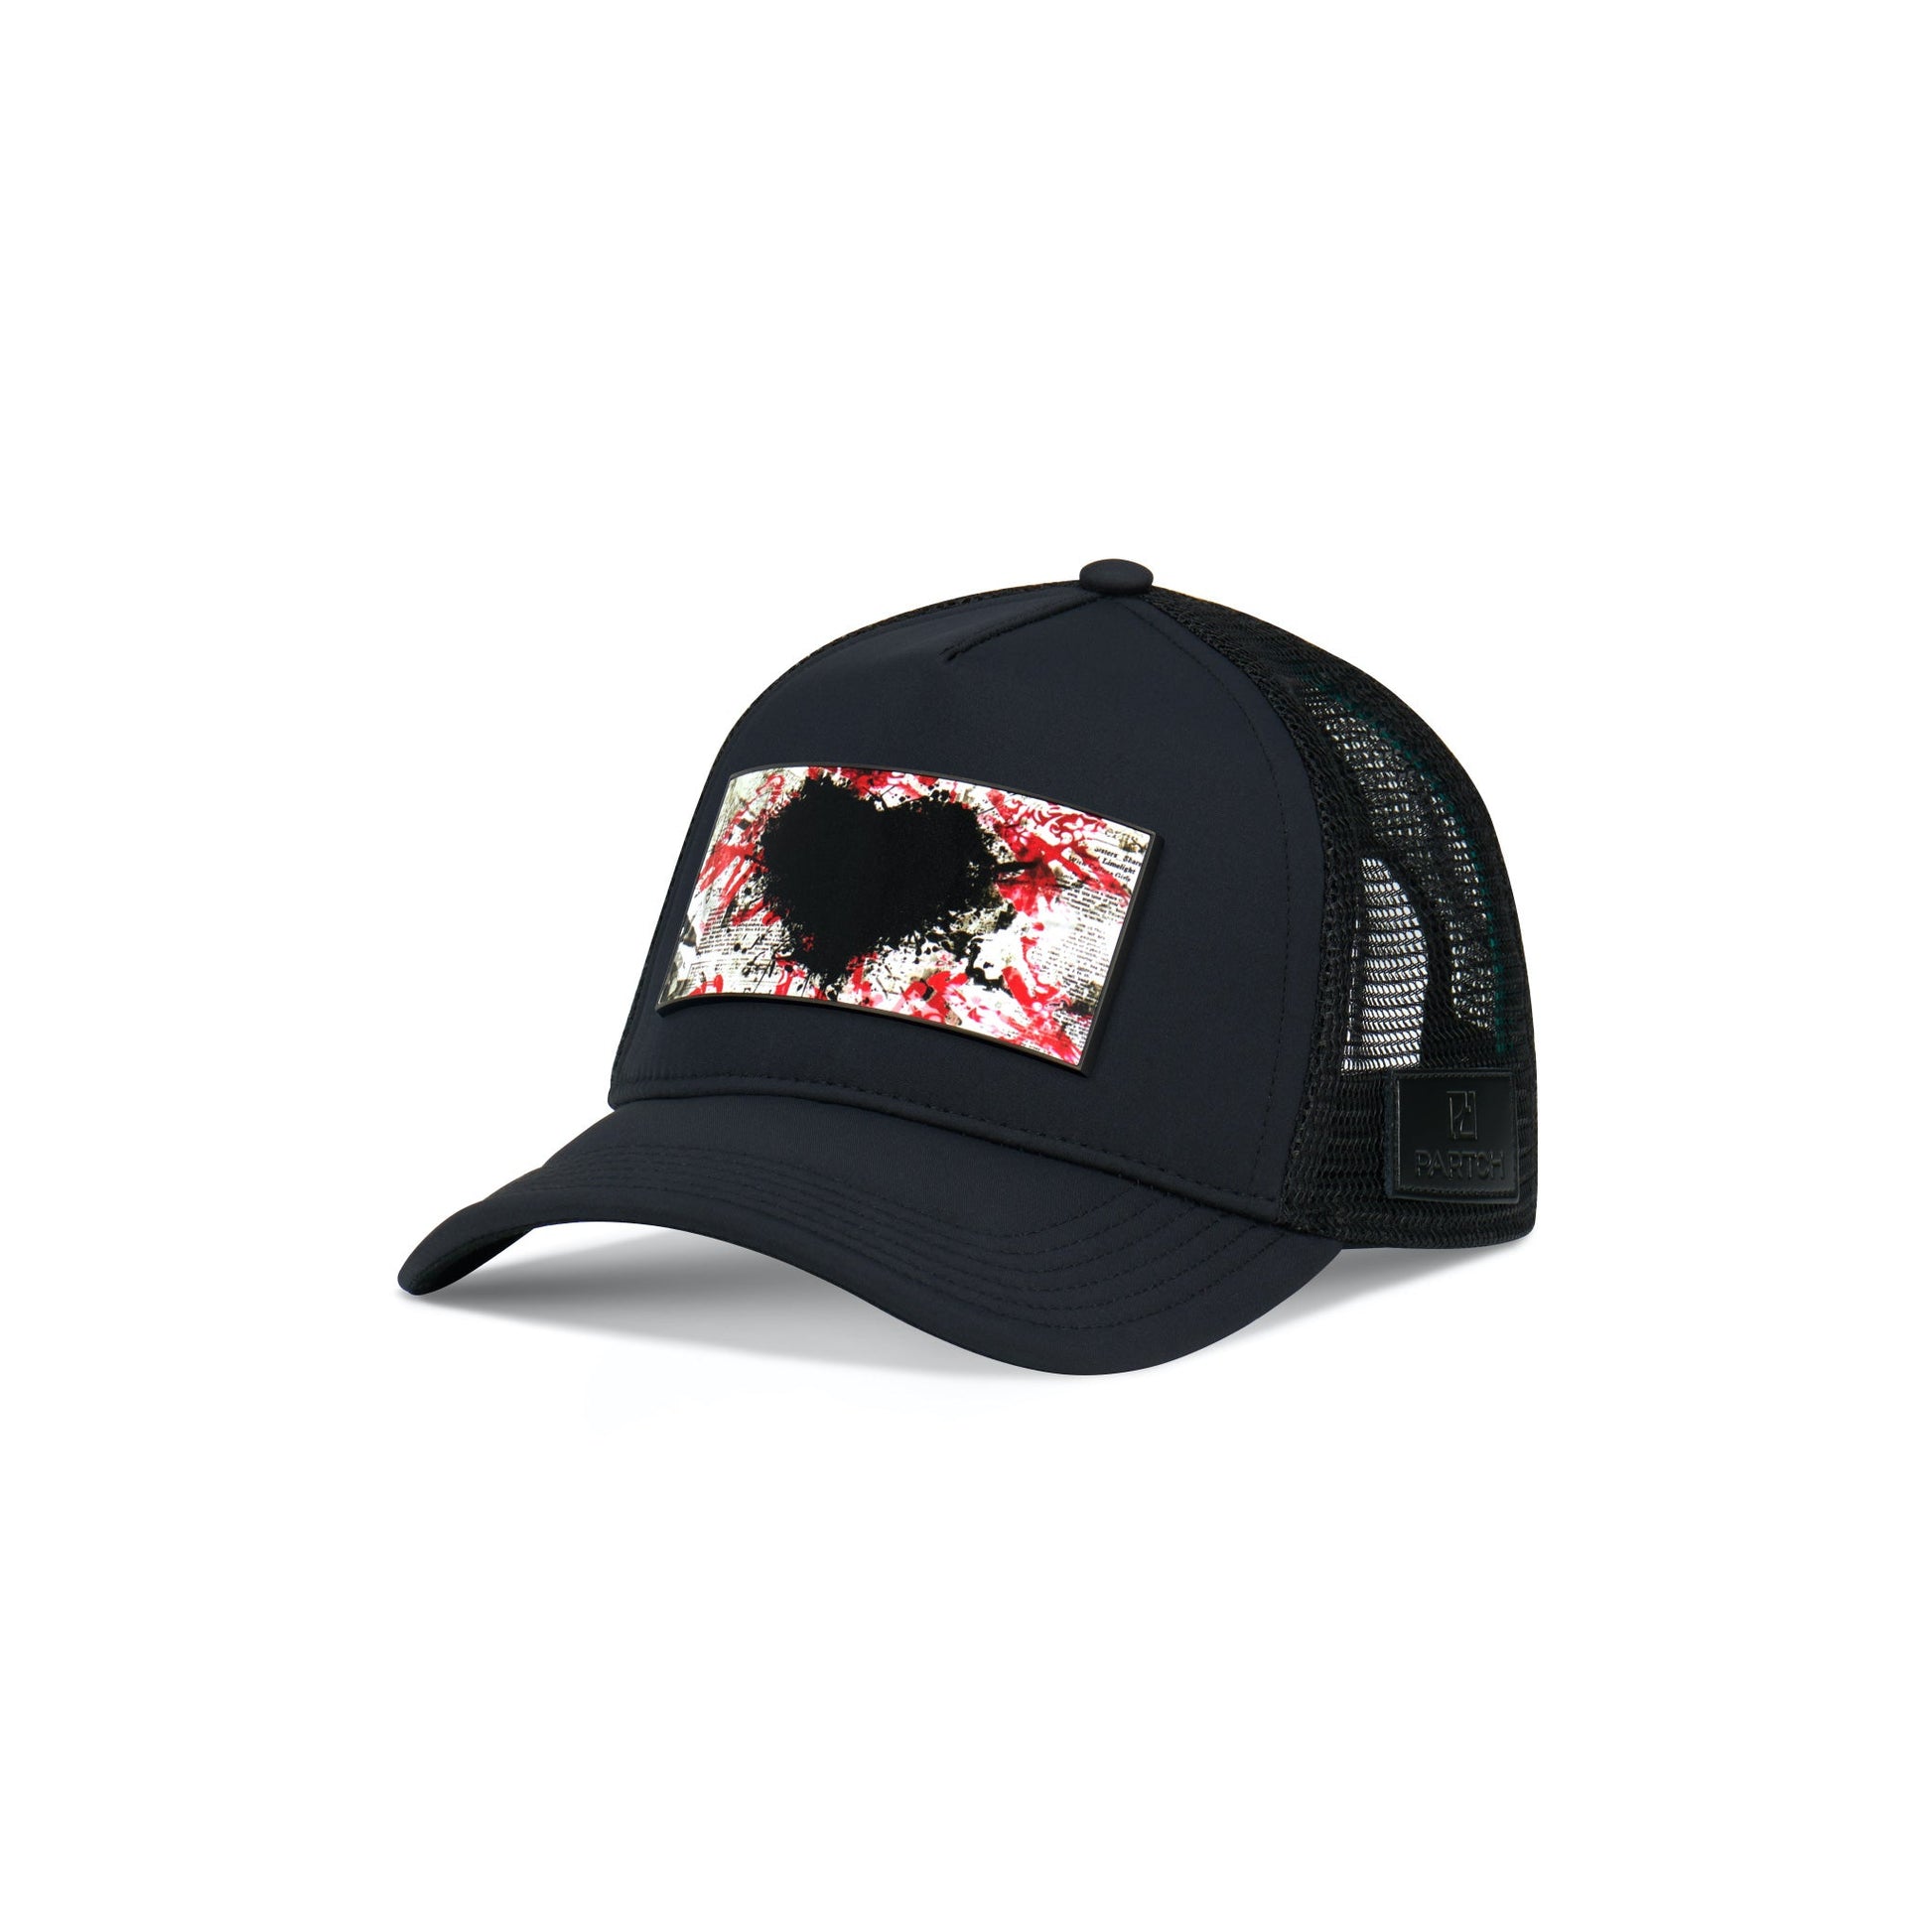 Partch Trucker Hat Black with PARTCH-Clip Inspyr Front View